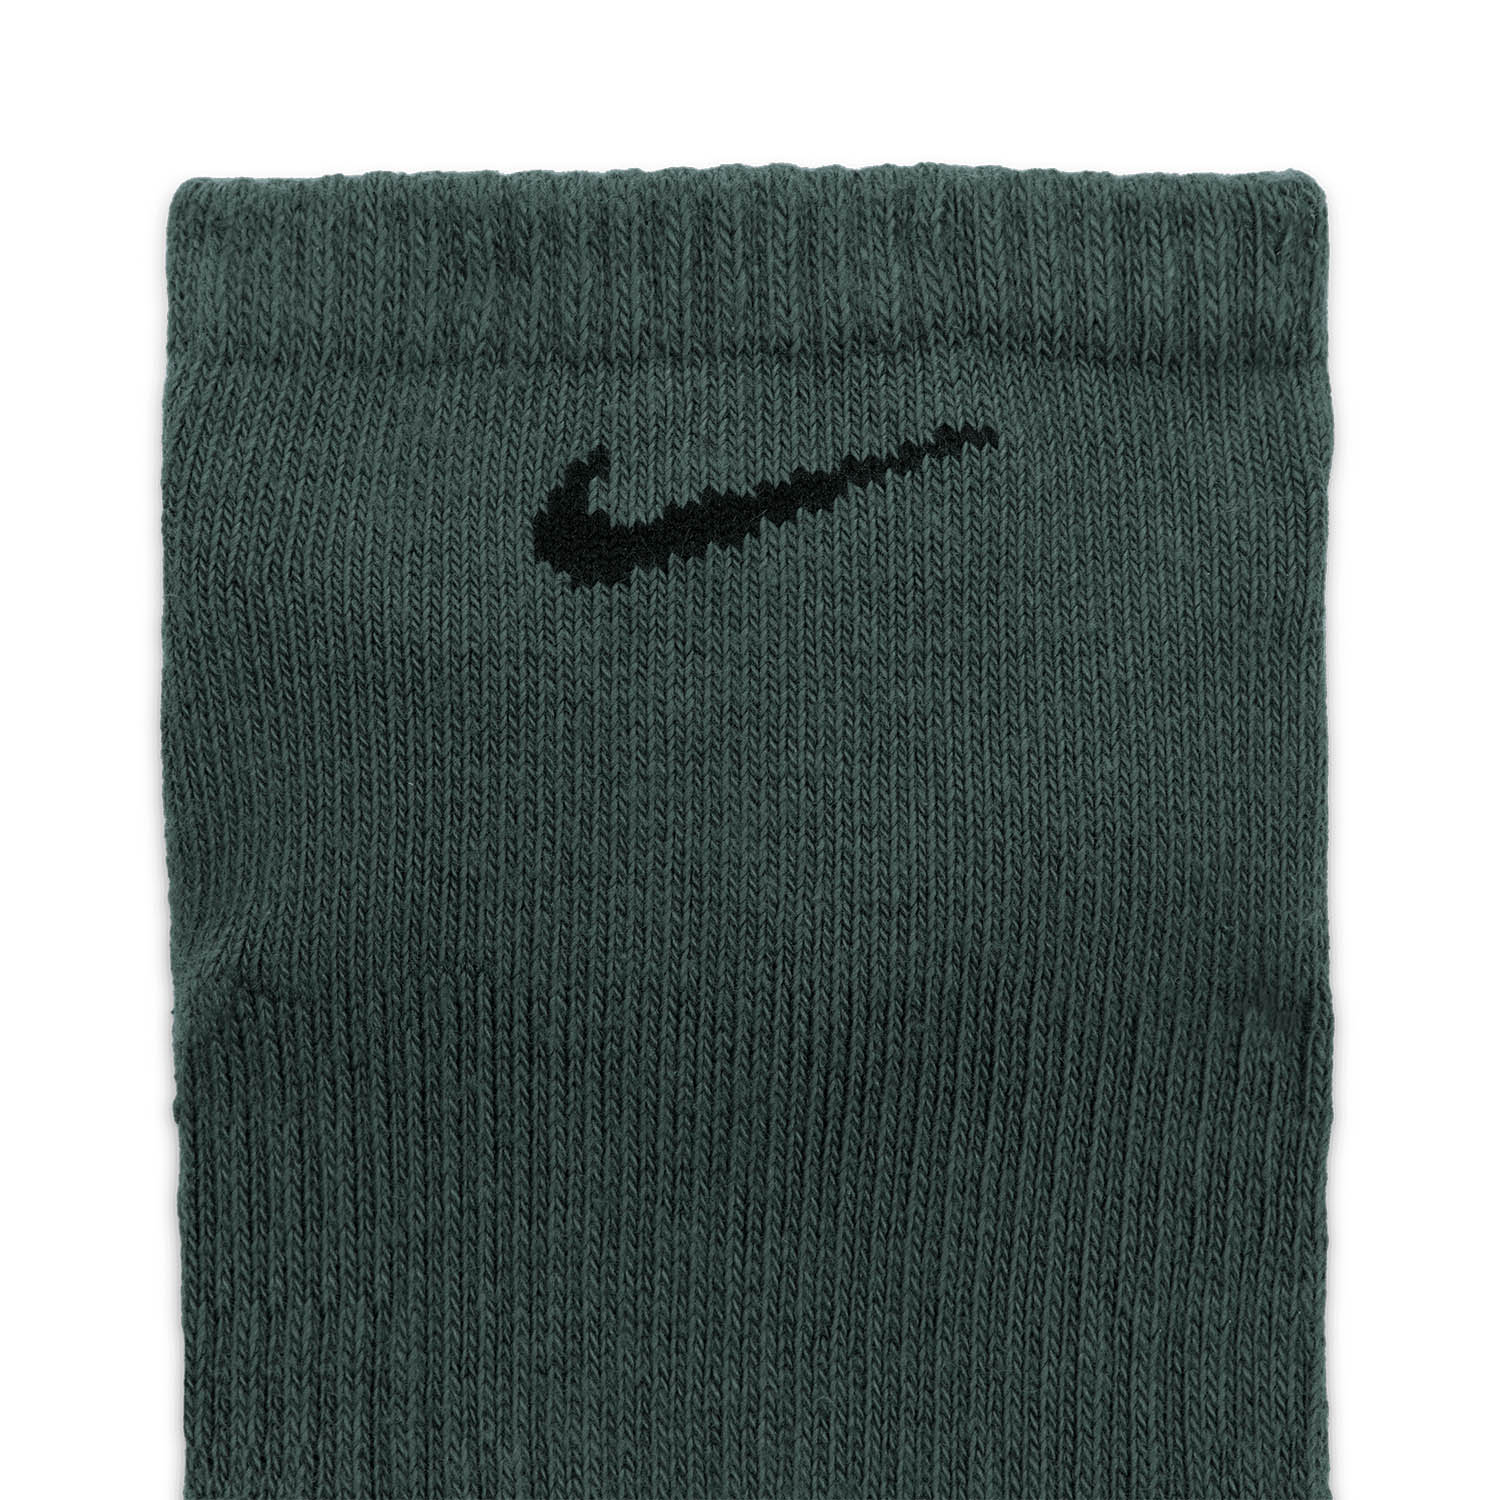 Nike Everyday Plus Cushion x 3 Socks - Green/Black